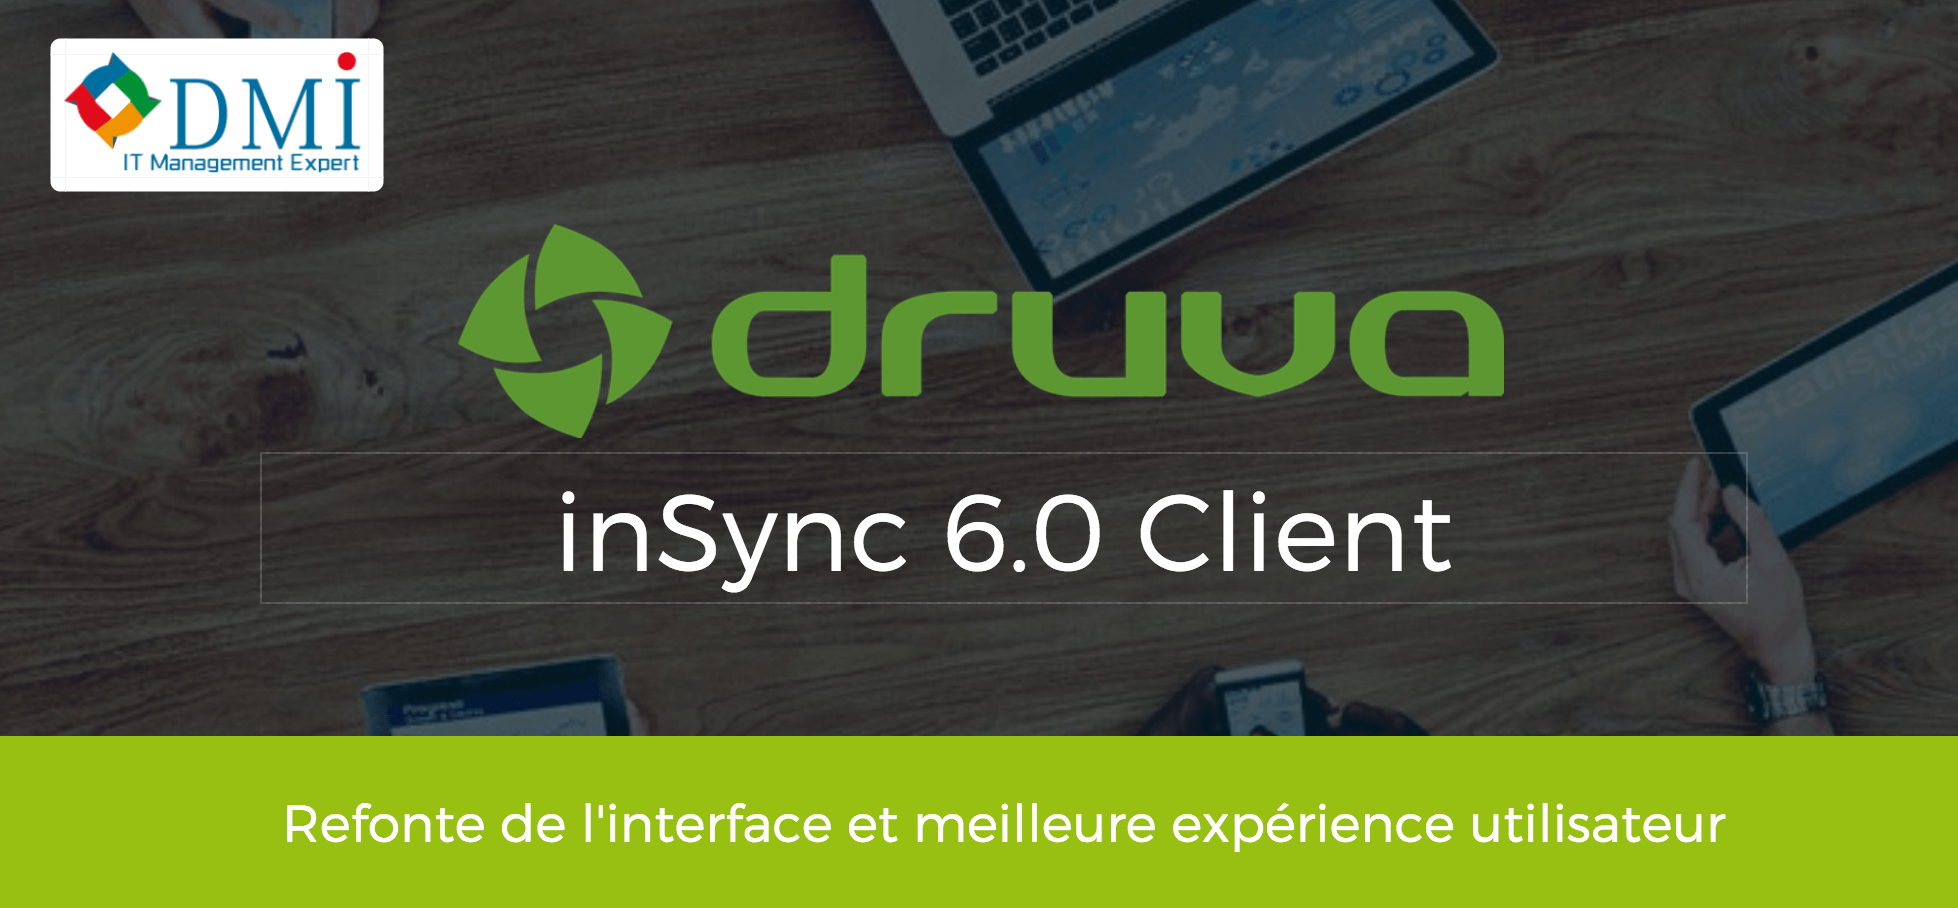 DMI - Druva inSync 6.0 Client